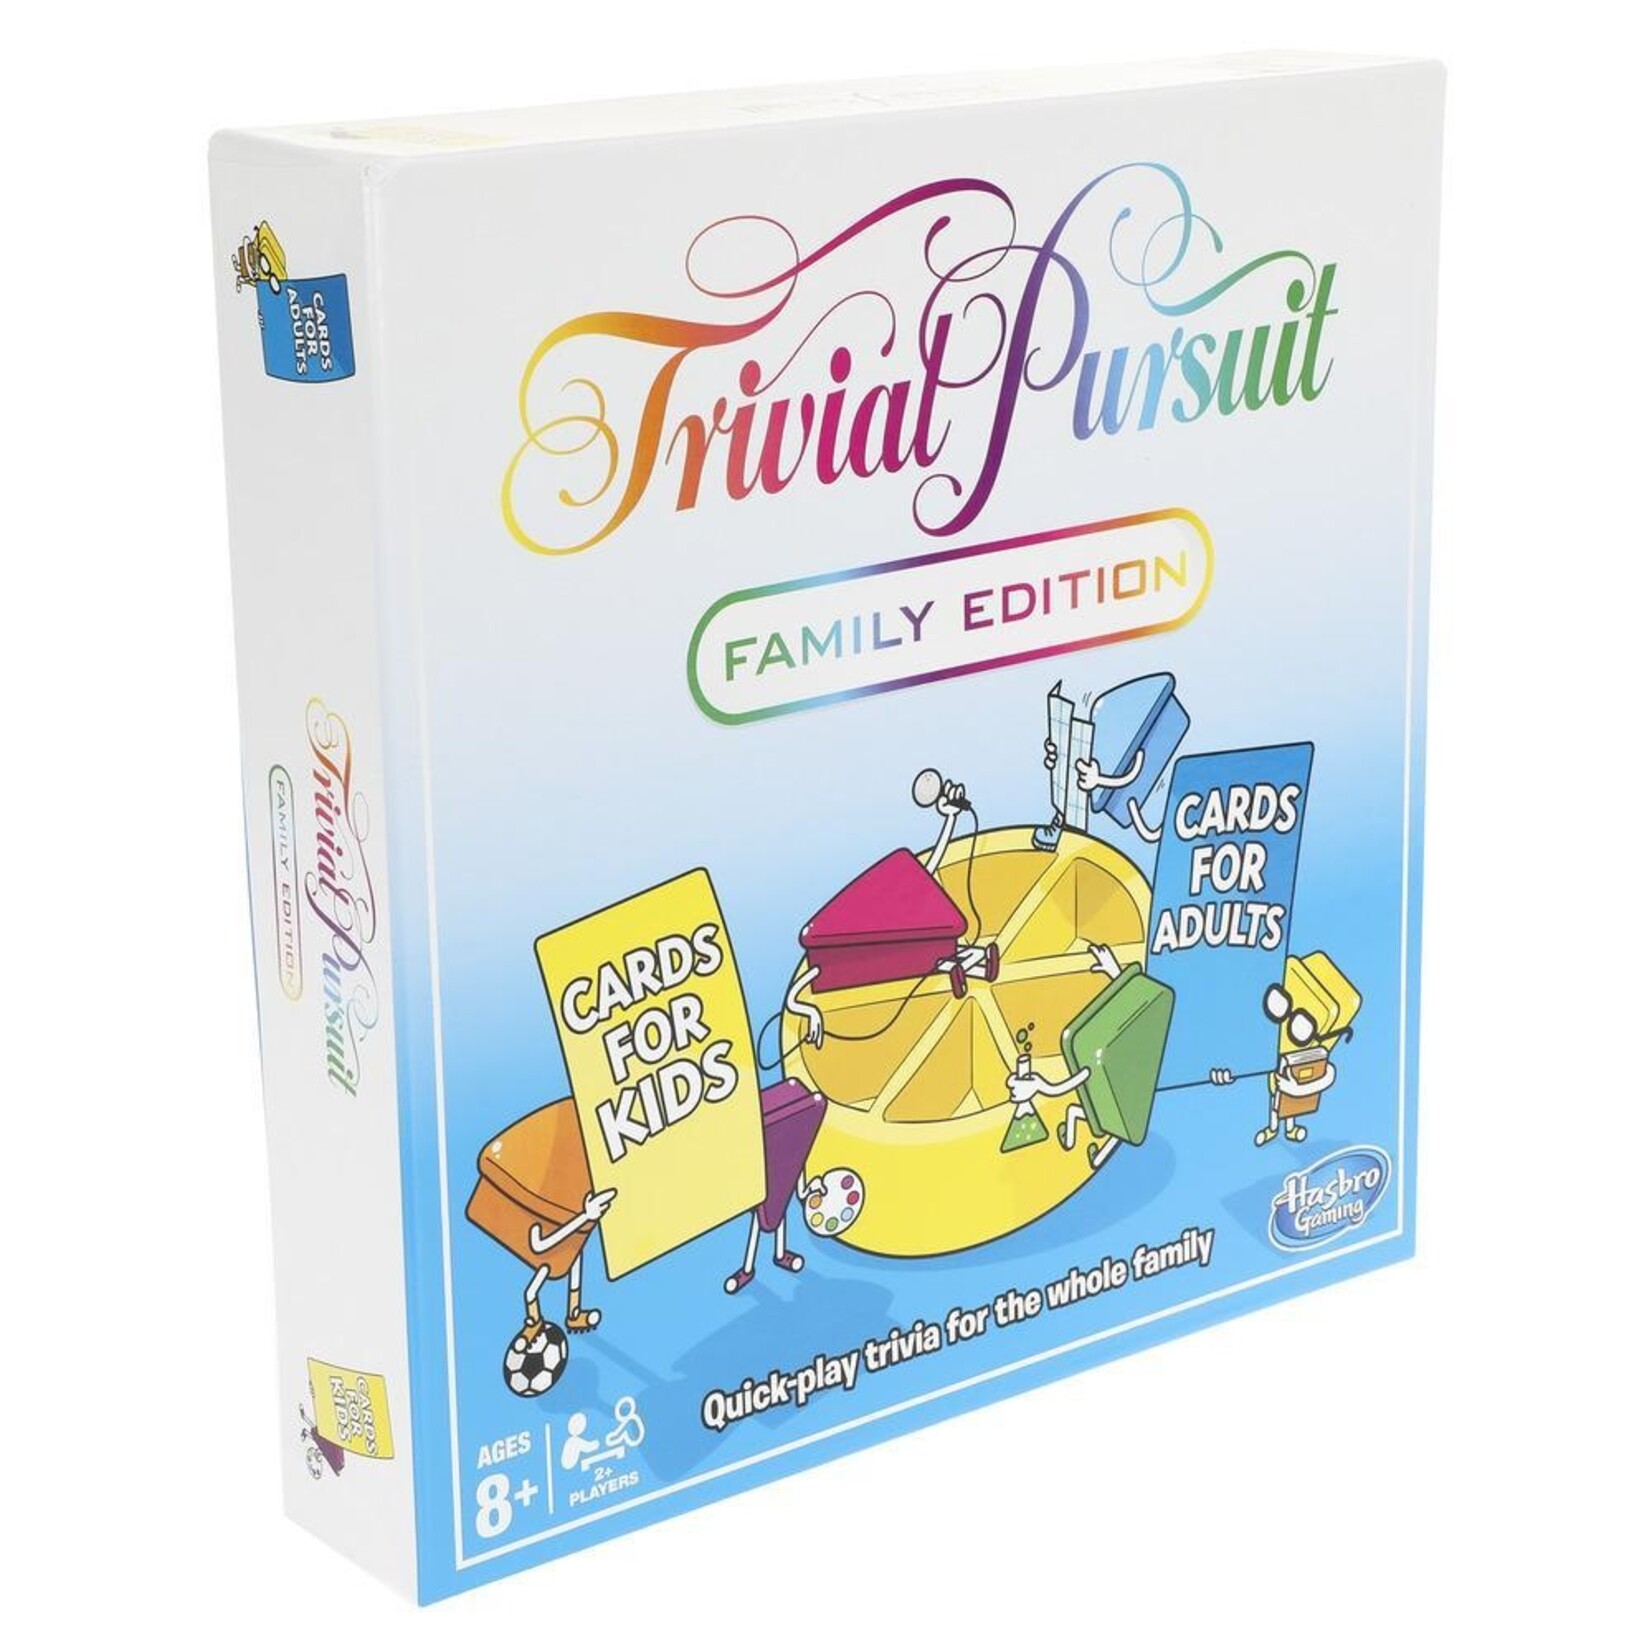 Borrow Trivial Pursuit family edition